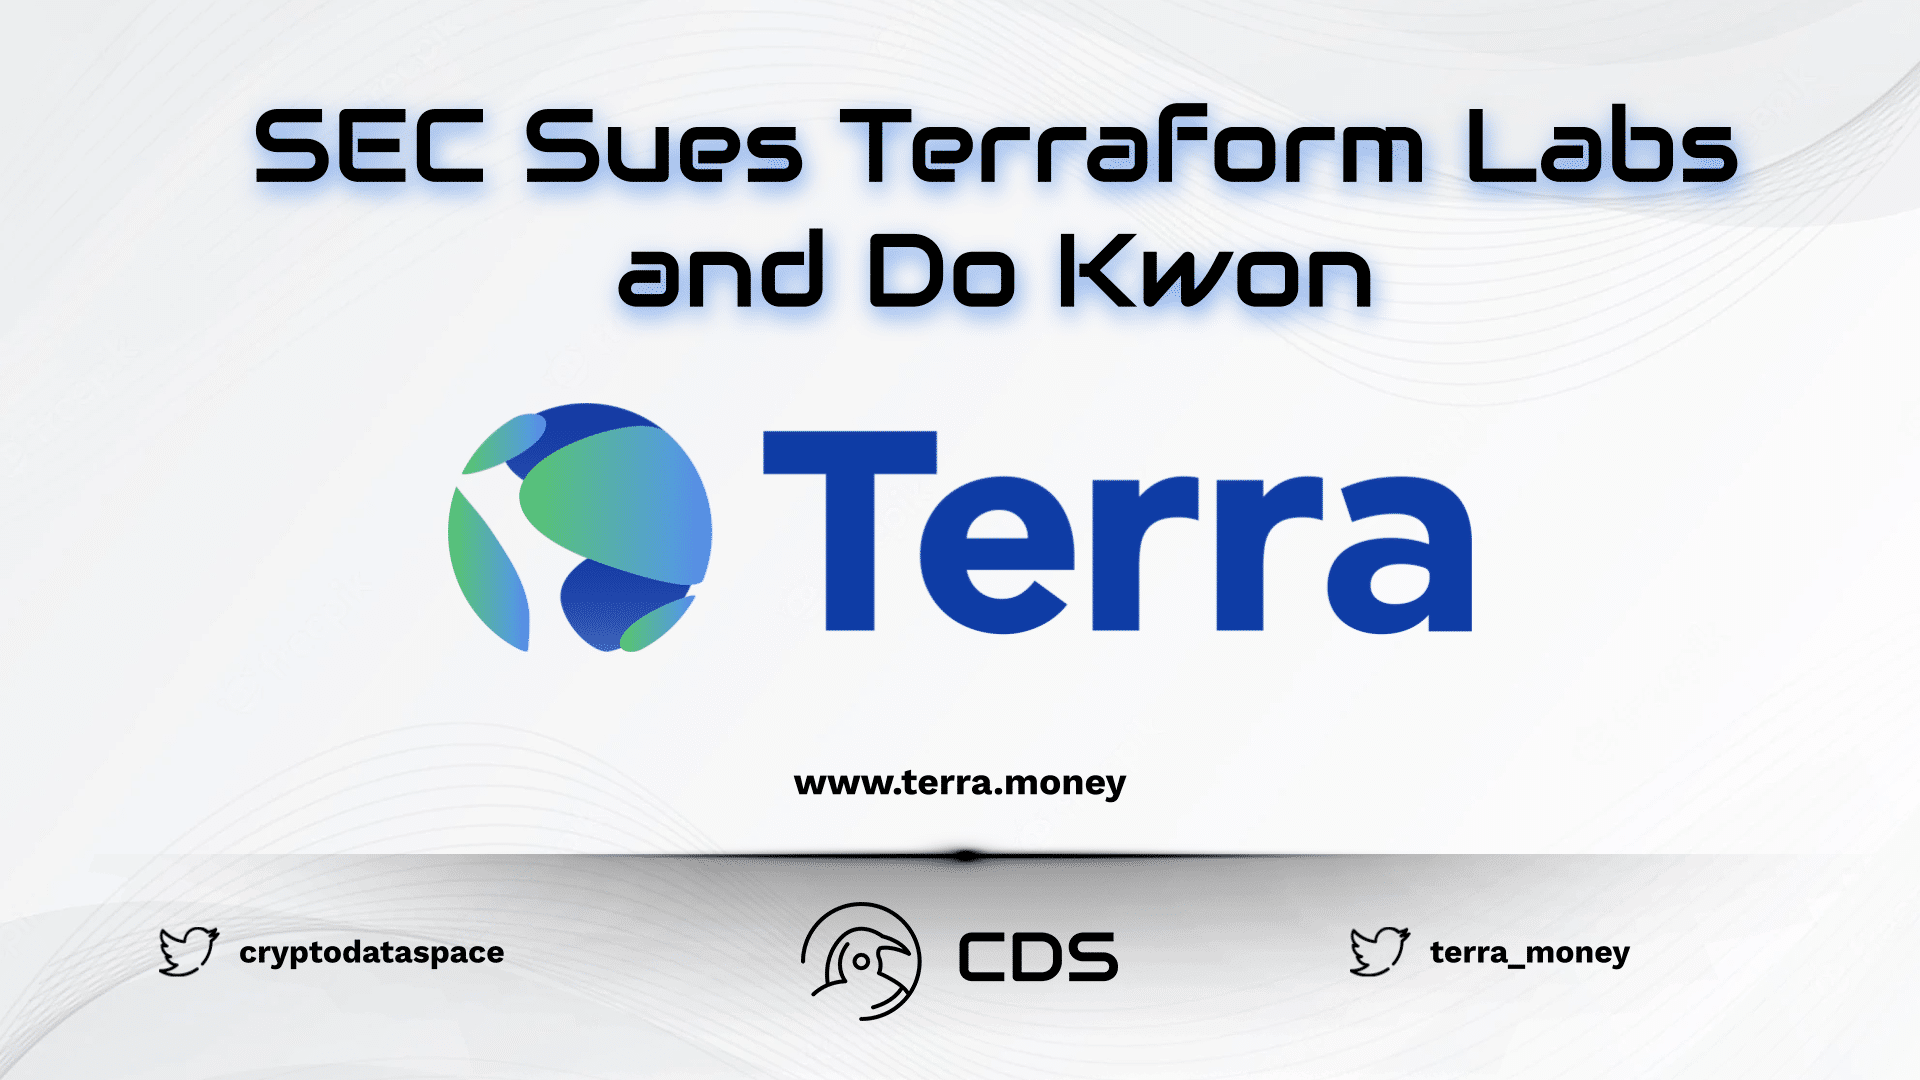 SEC Sues Terraform Labs and Do Kwon